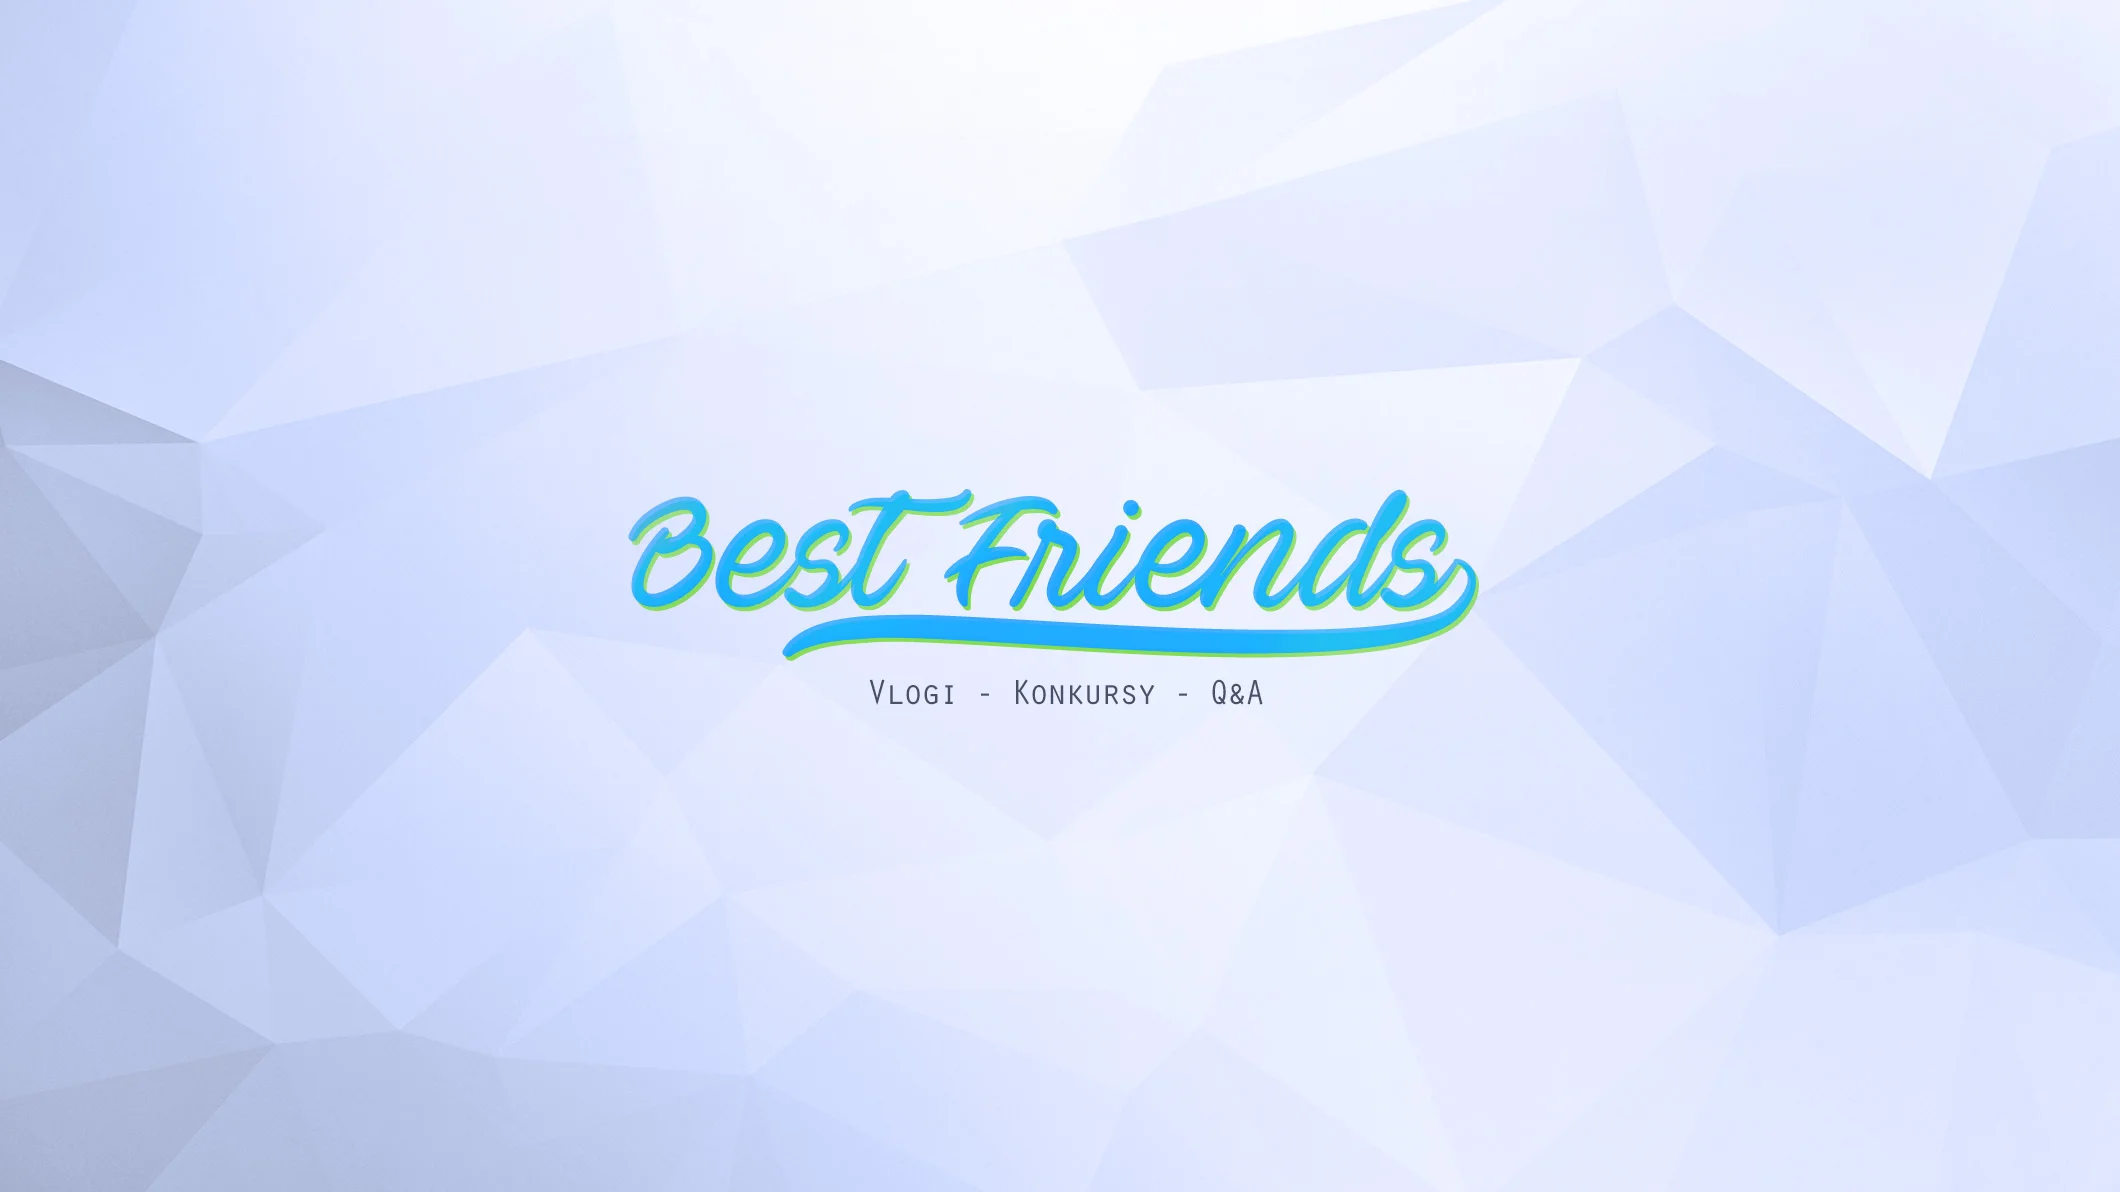 Best Friends banner